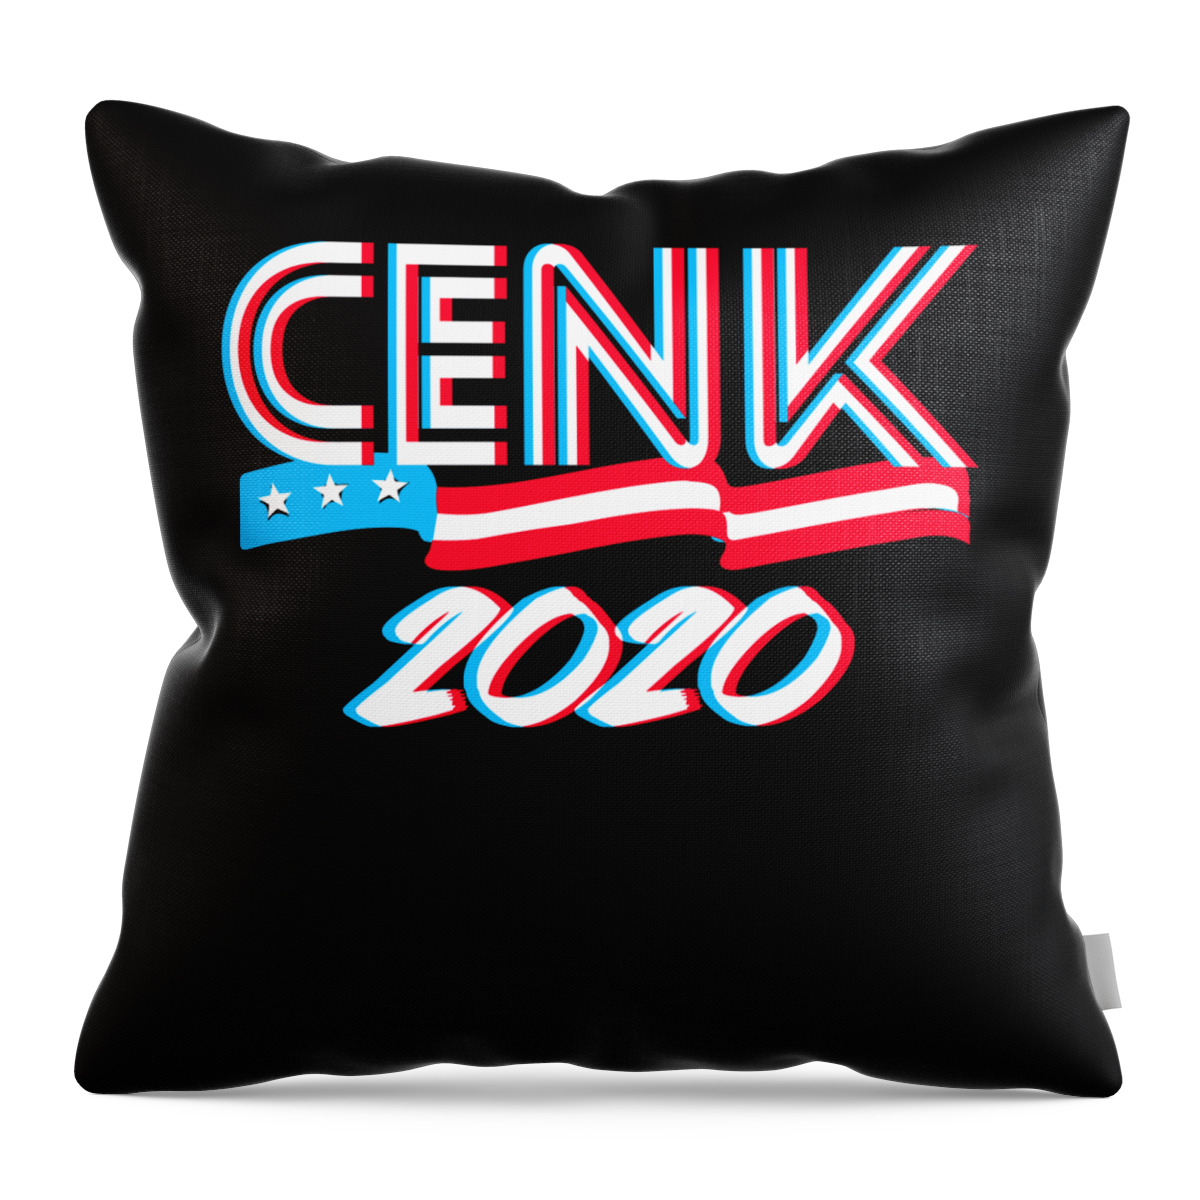 Progressive Throw Pillow featuring the digital art Cenk Uygur For Congress 2020 by Flippin Sweet Gear